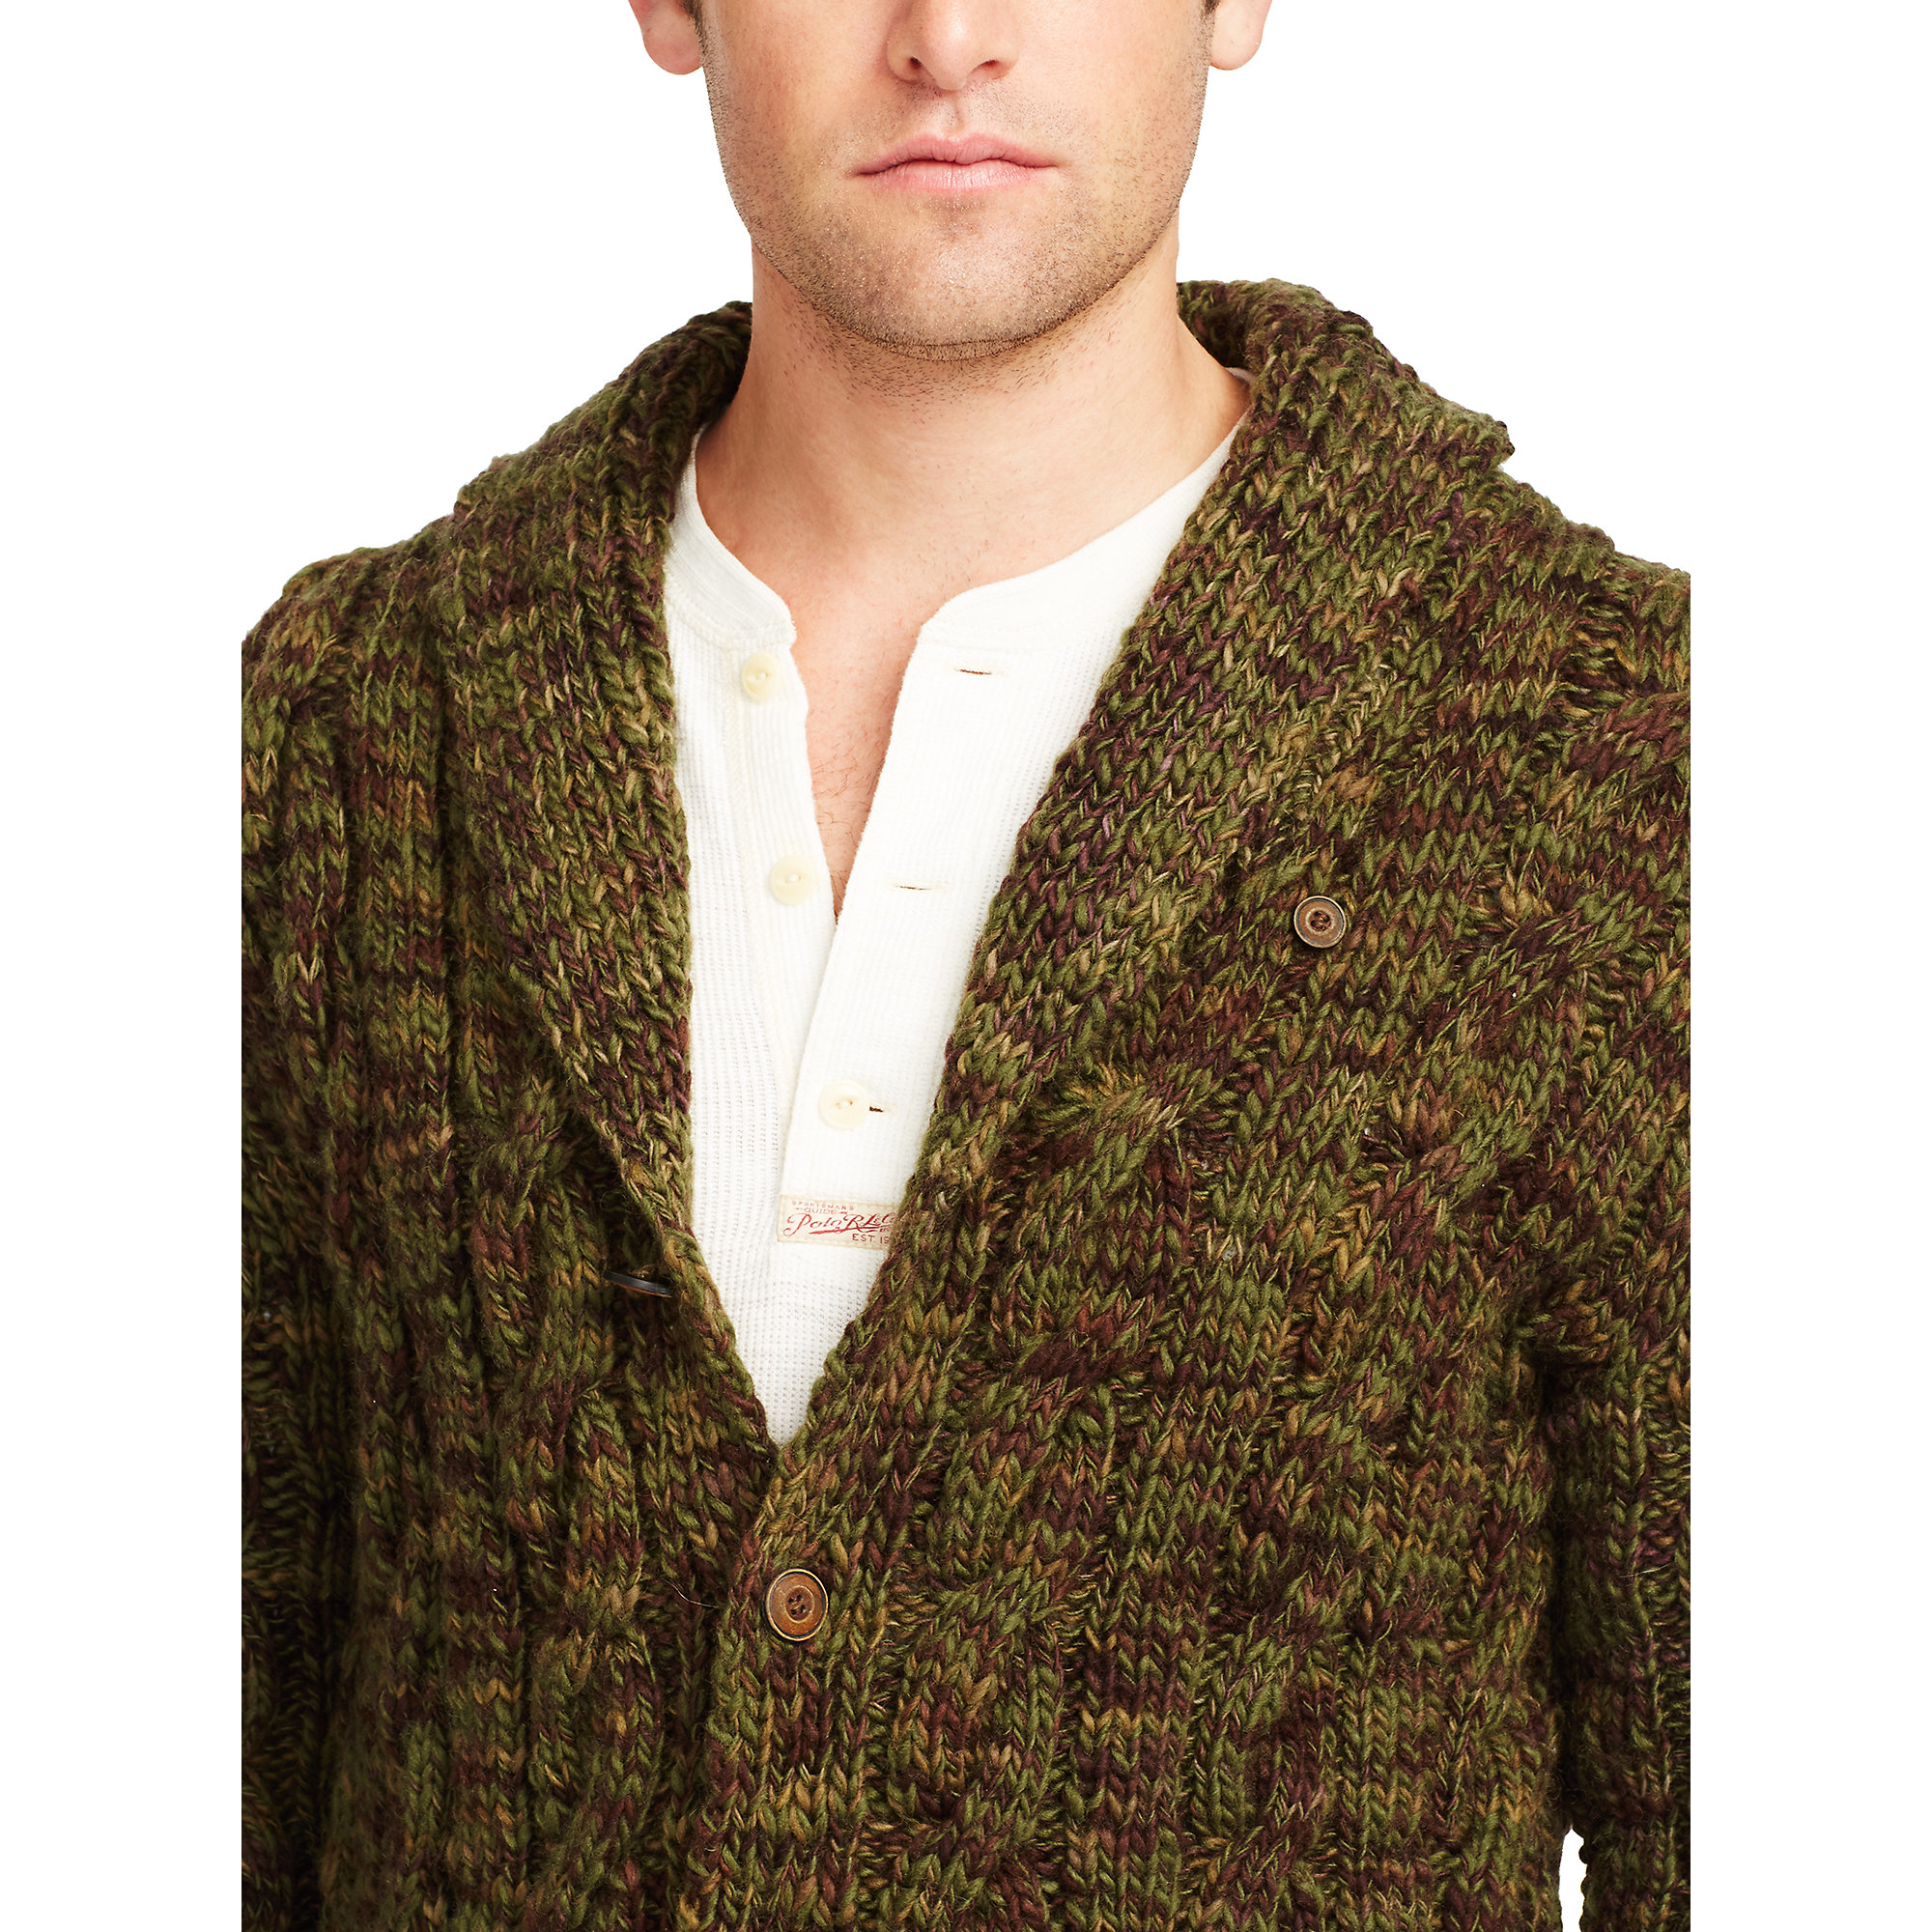 Lyst - Polo Ralph Lauren Camo Wool Shawl Cardigan in Green for Men